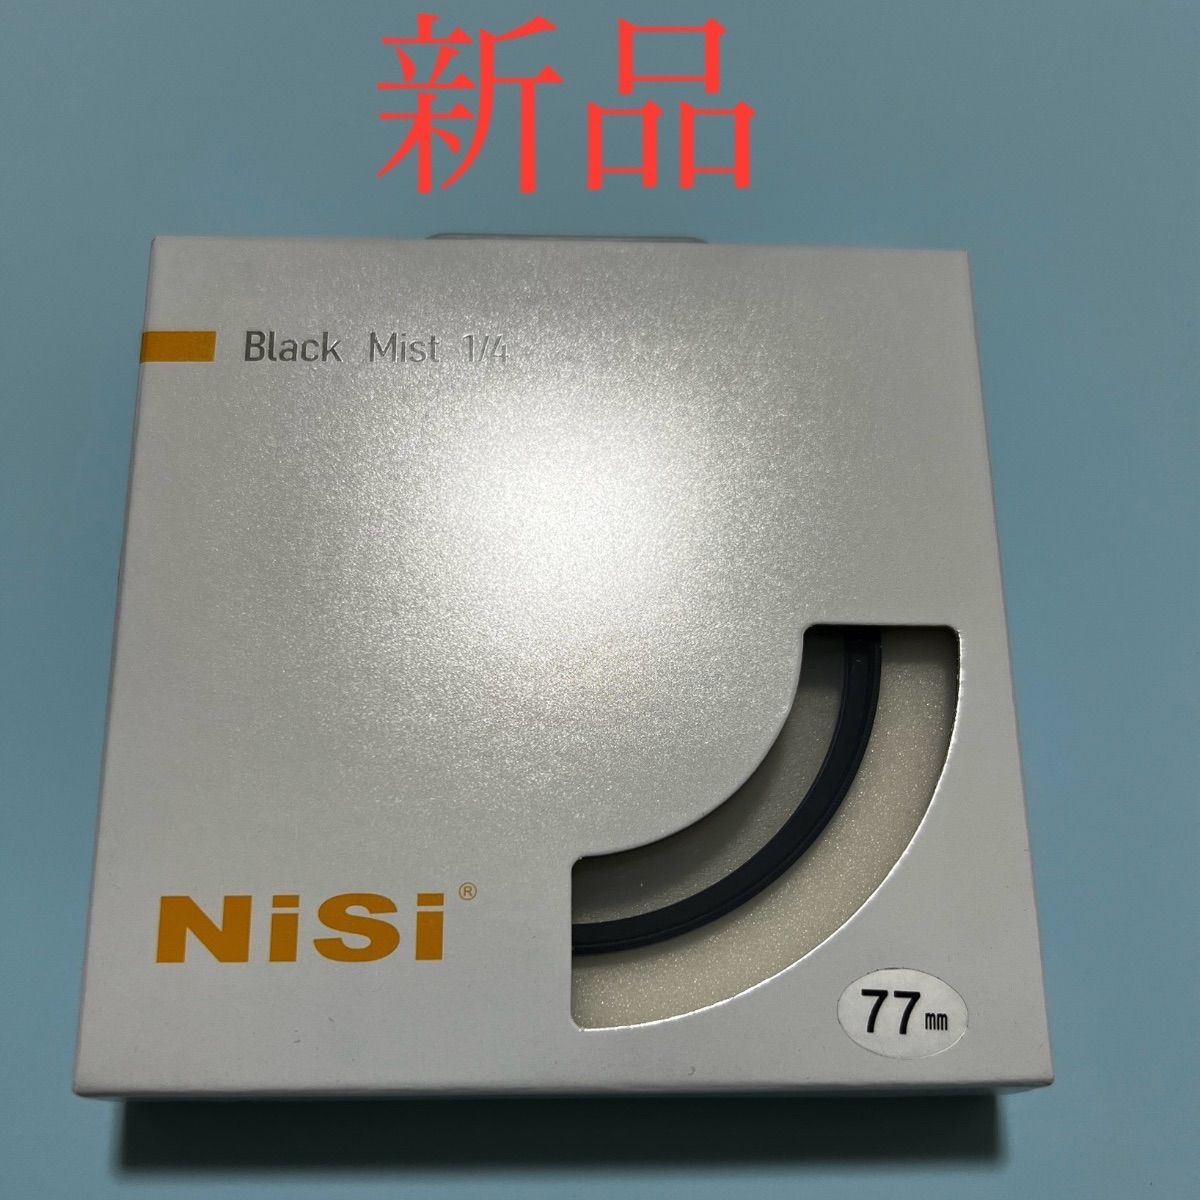 NiSi 円形フィルター ブラックミスト 1/4 77mm - メルカリ